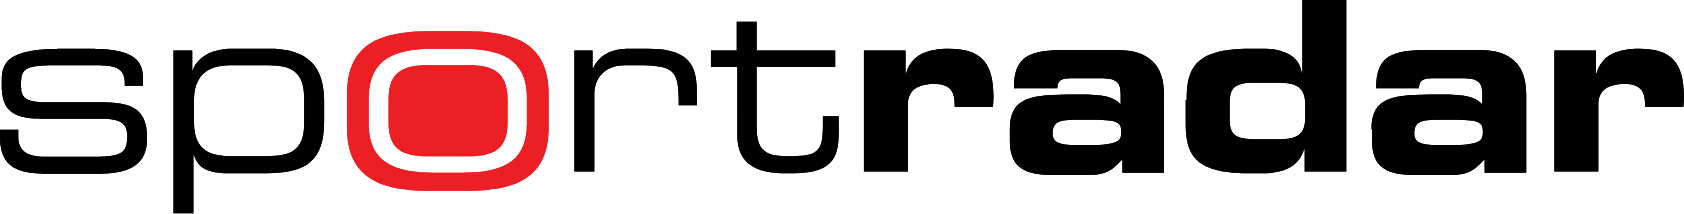 Sportradar logo large (transparent PNG)